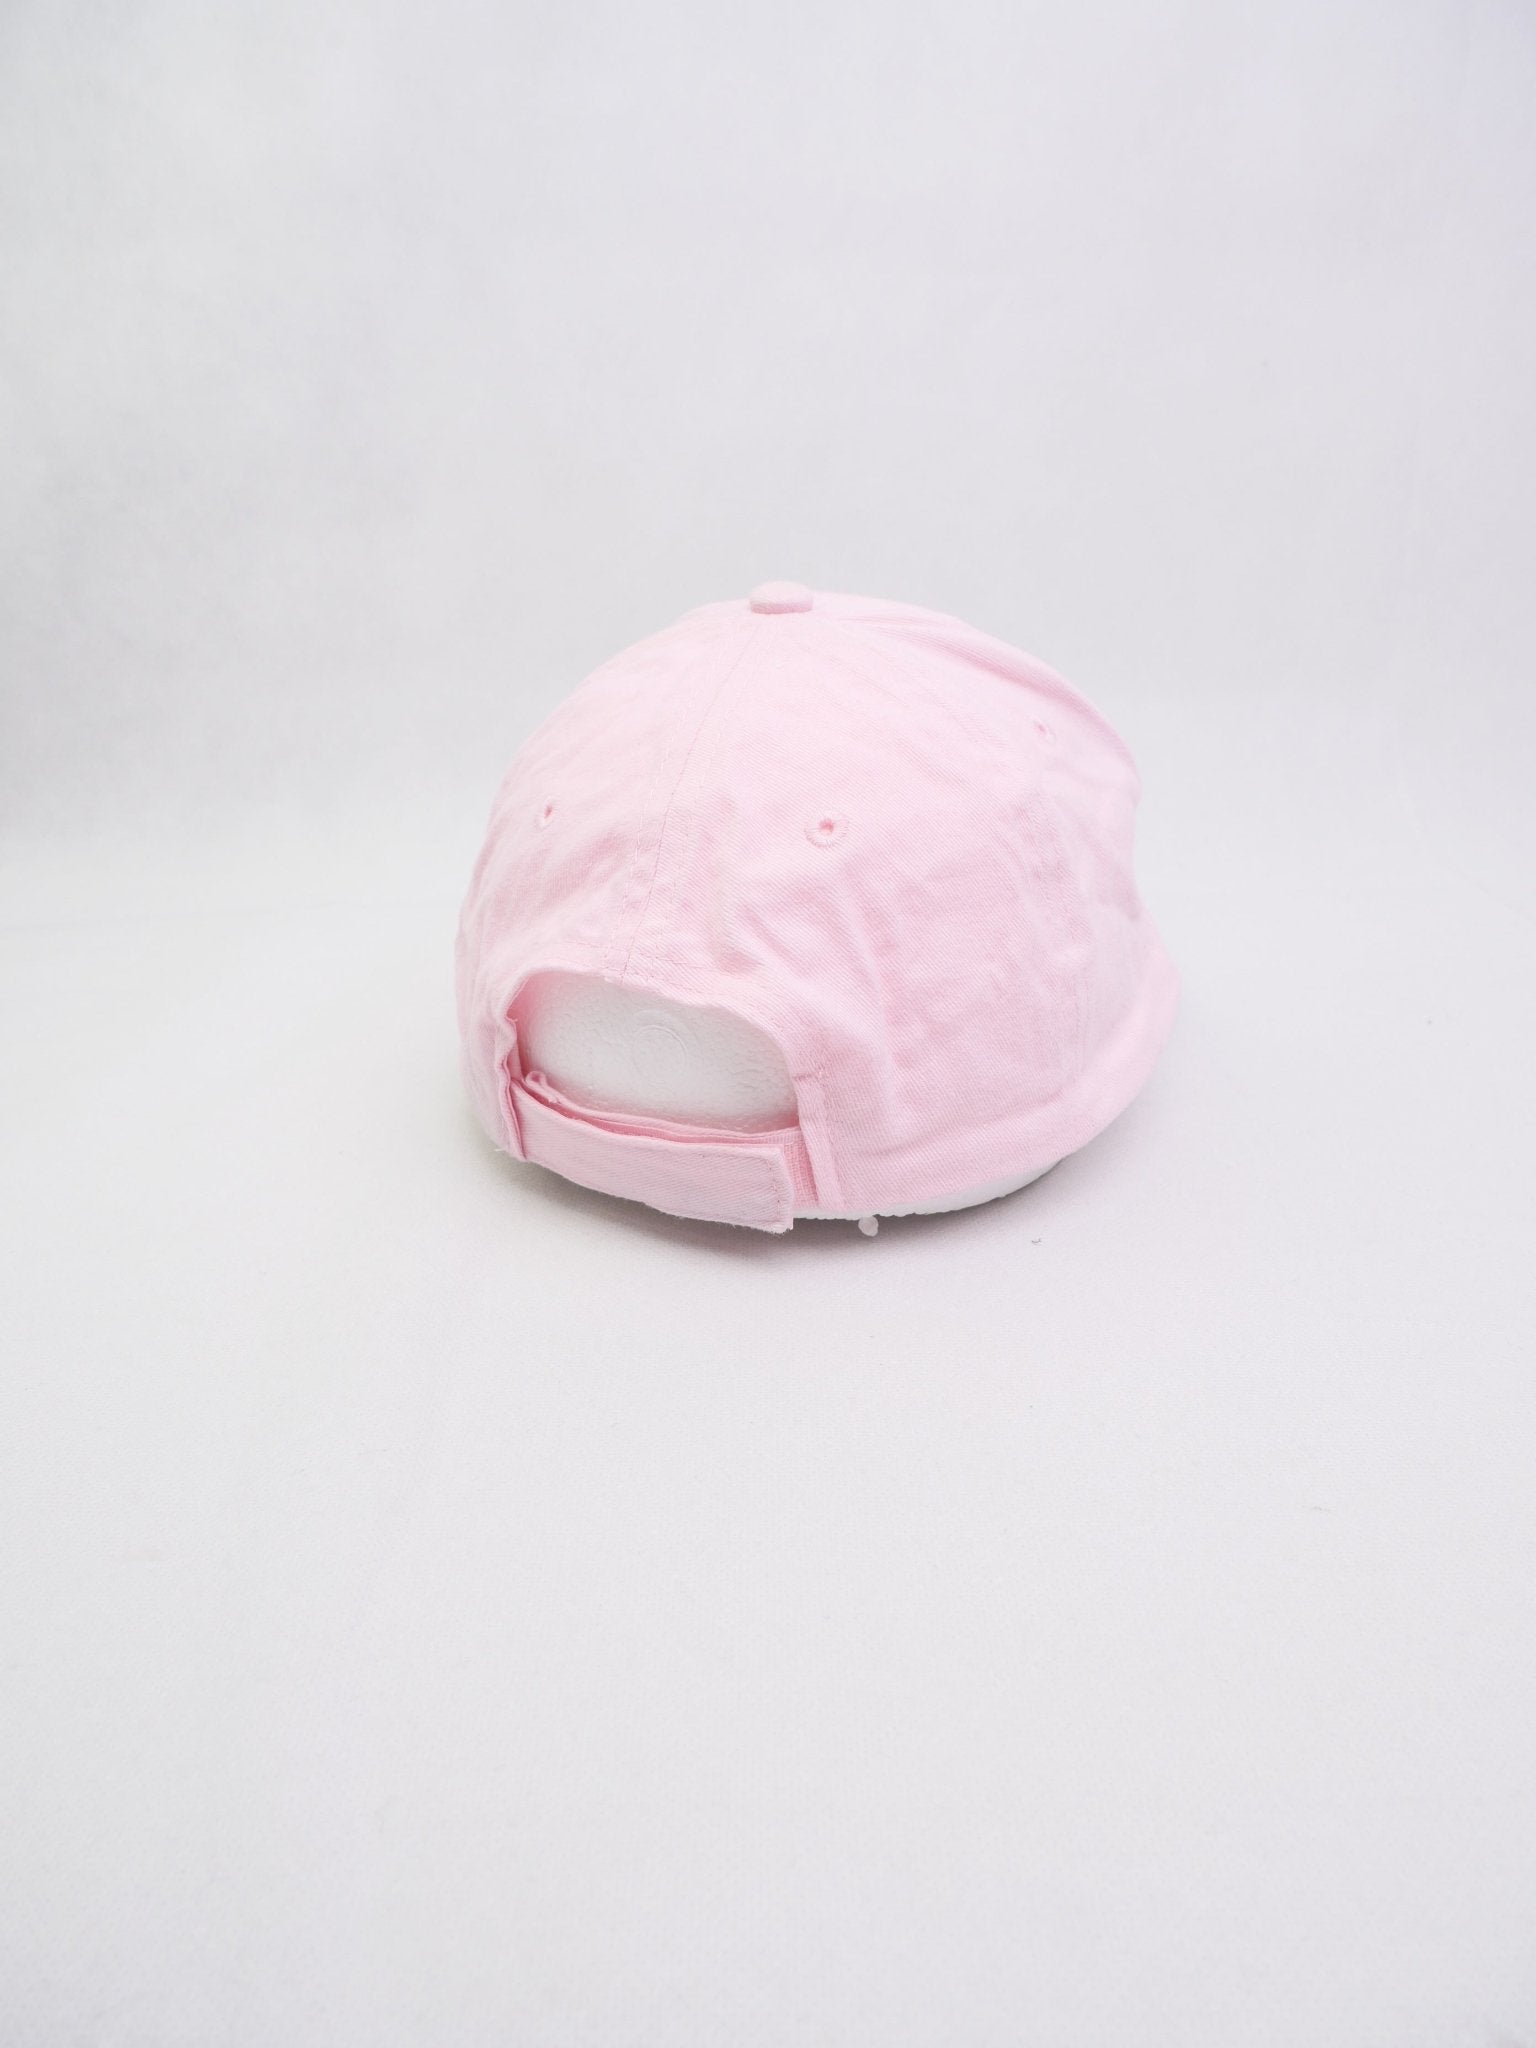 'Miller Lite' embroidered Logo pink Cap Accessoire - Peeces